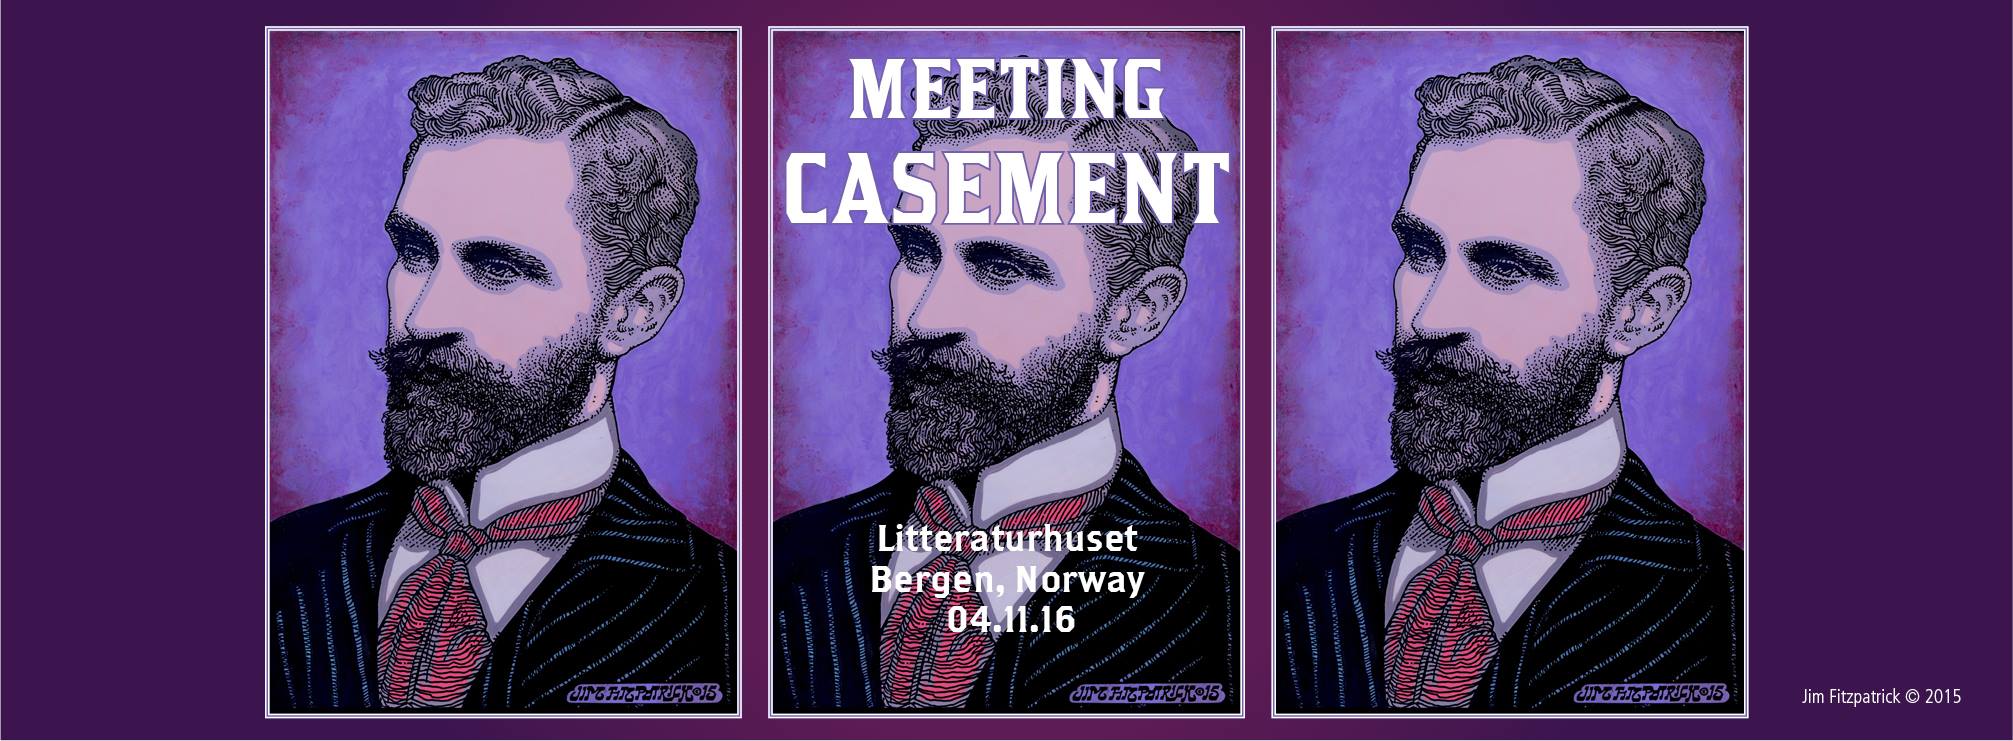 The Roger Casement Event in Litteraturhuset